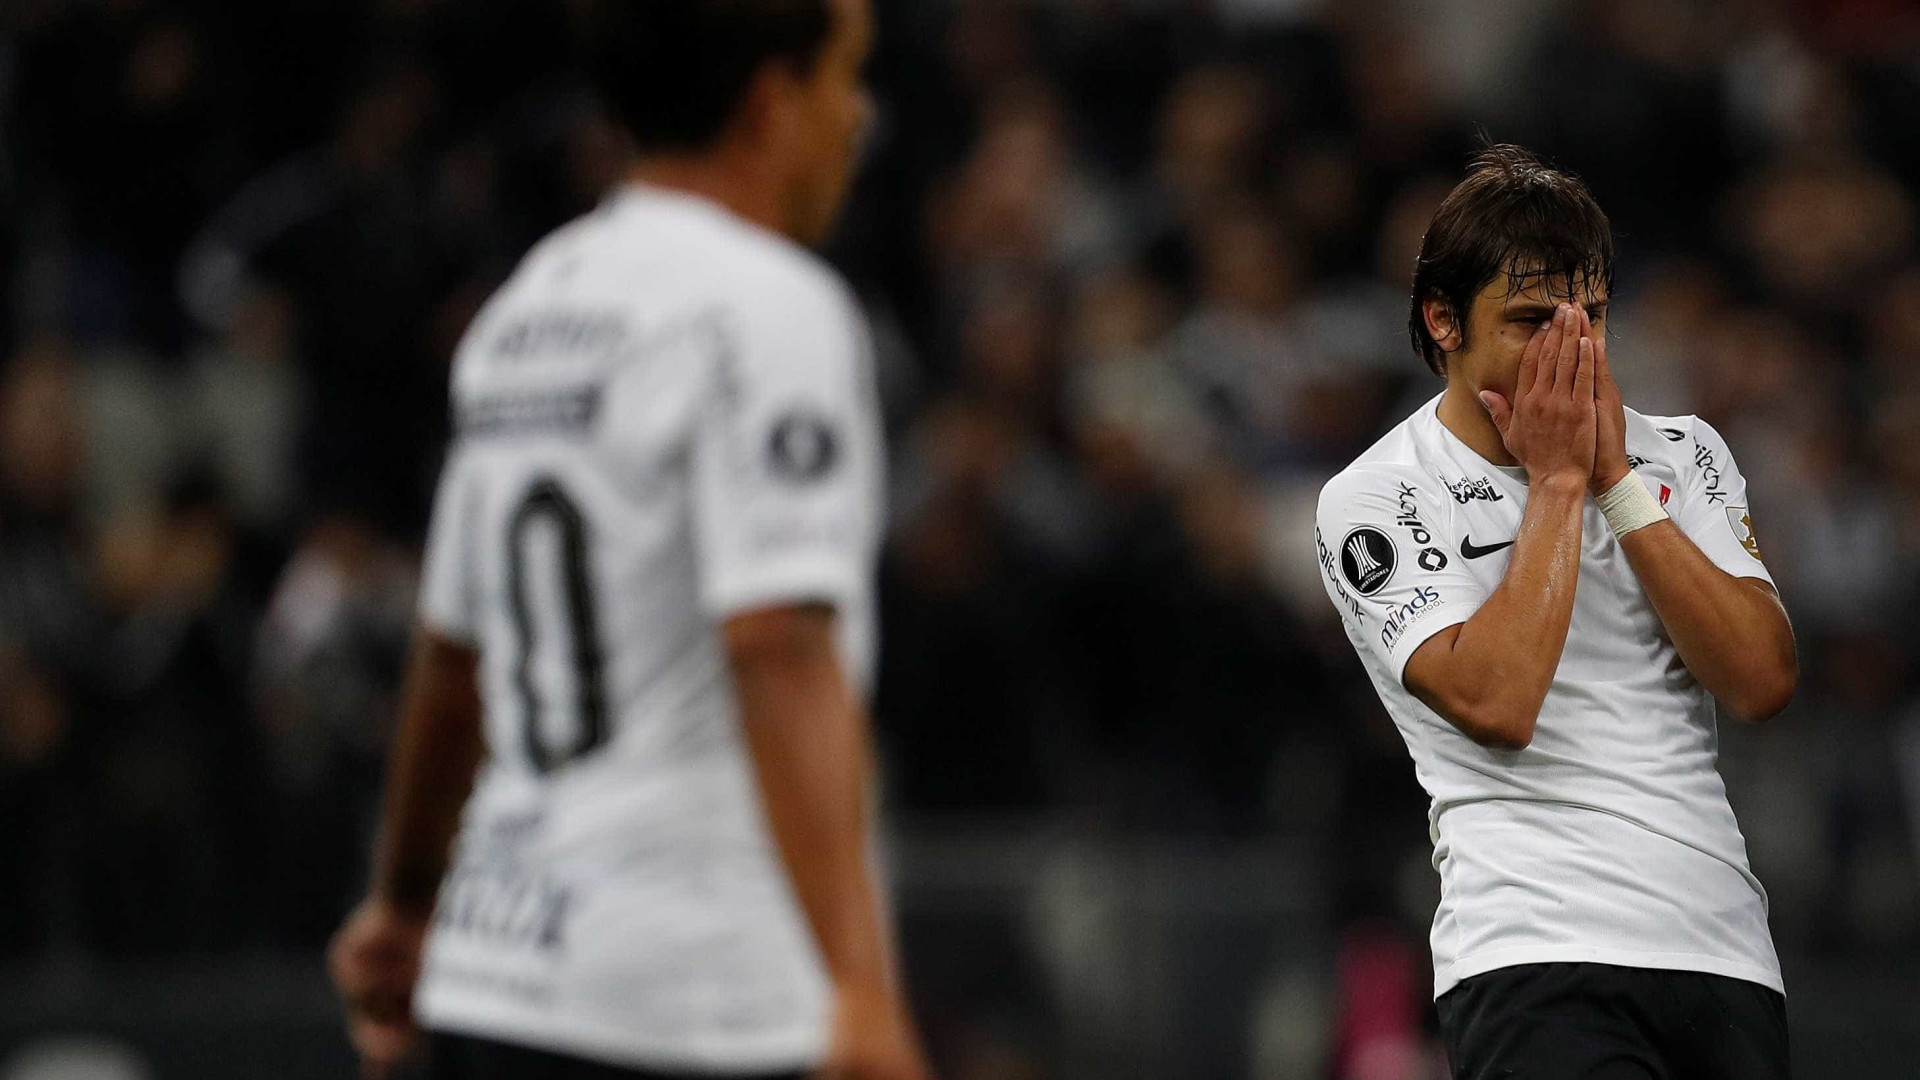 Seca de gols de Romero afeta rendimento do Corinthians